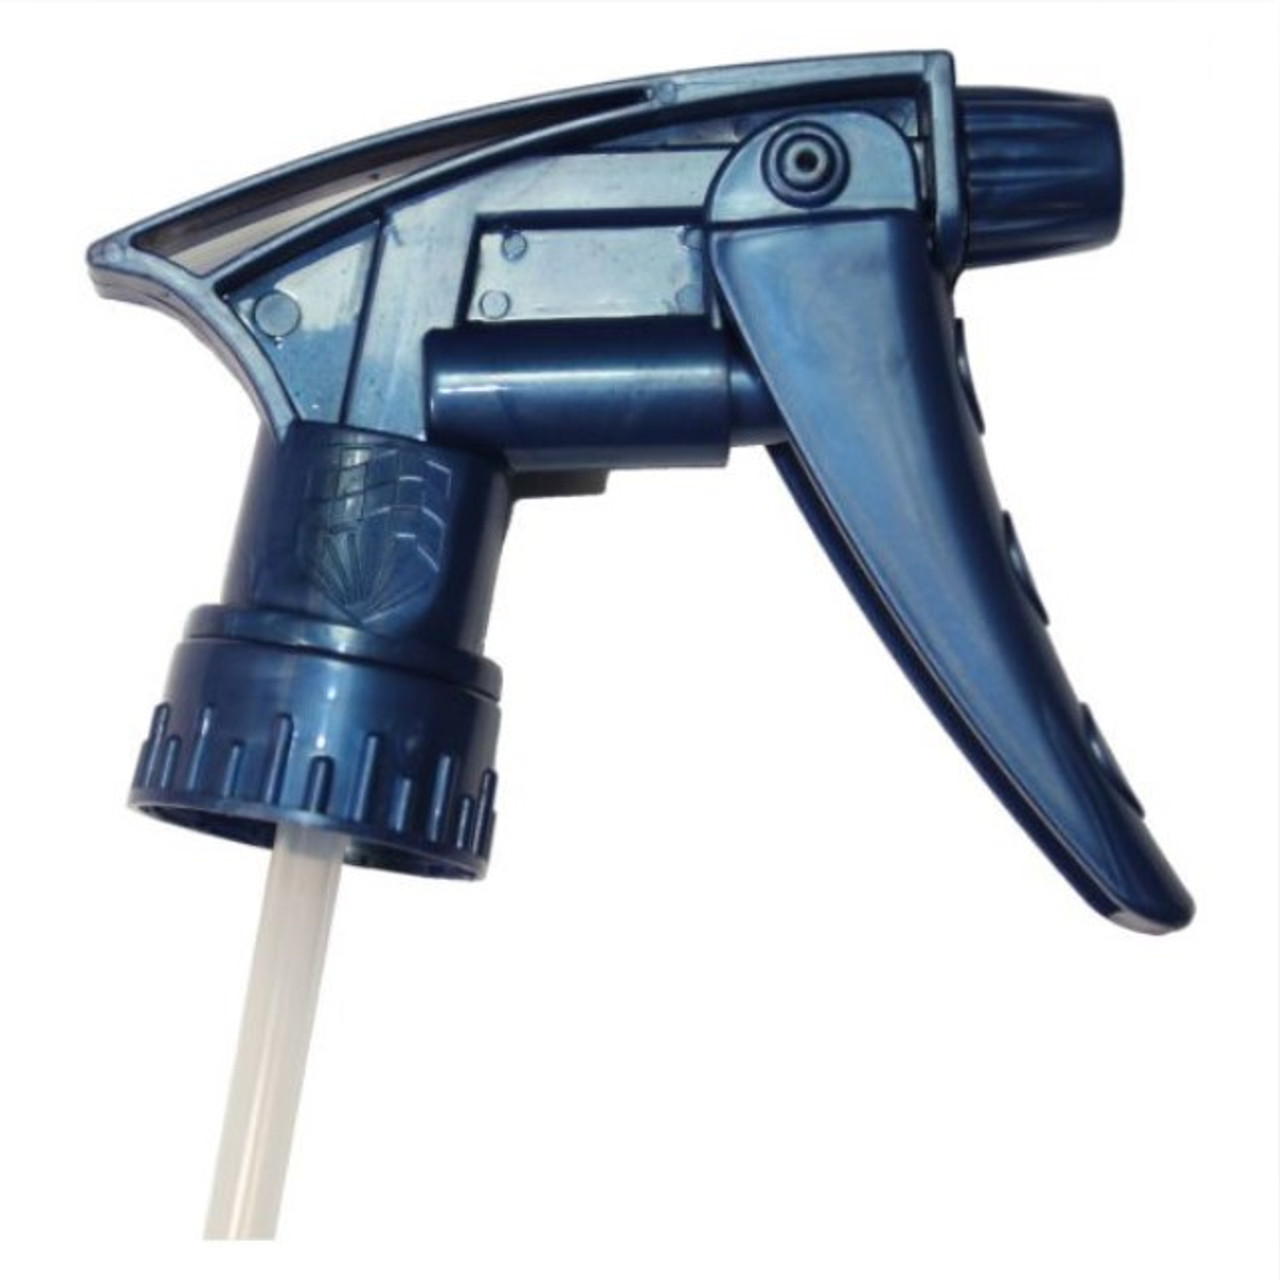 22oz Blue Trigger Sprayer Bottles 28/410 (150/case) - Liquid